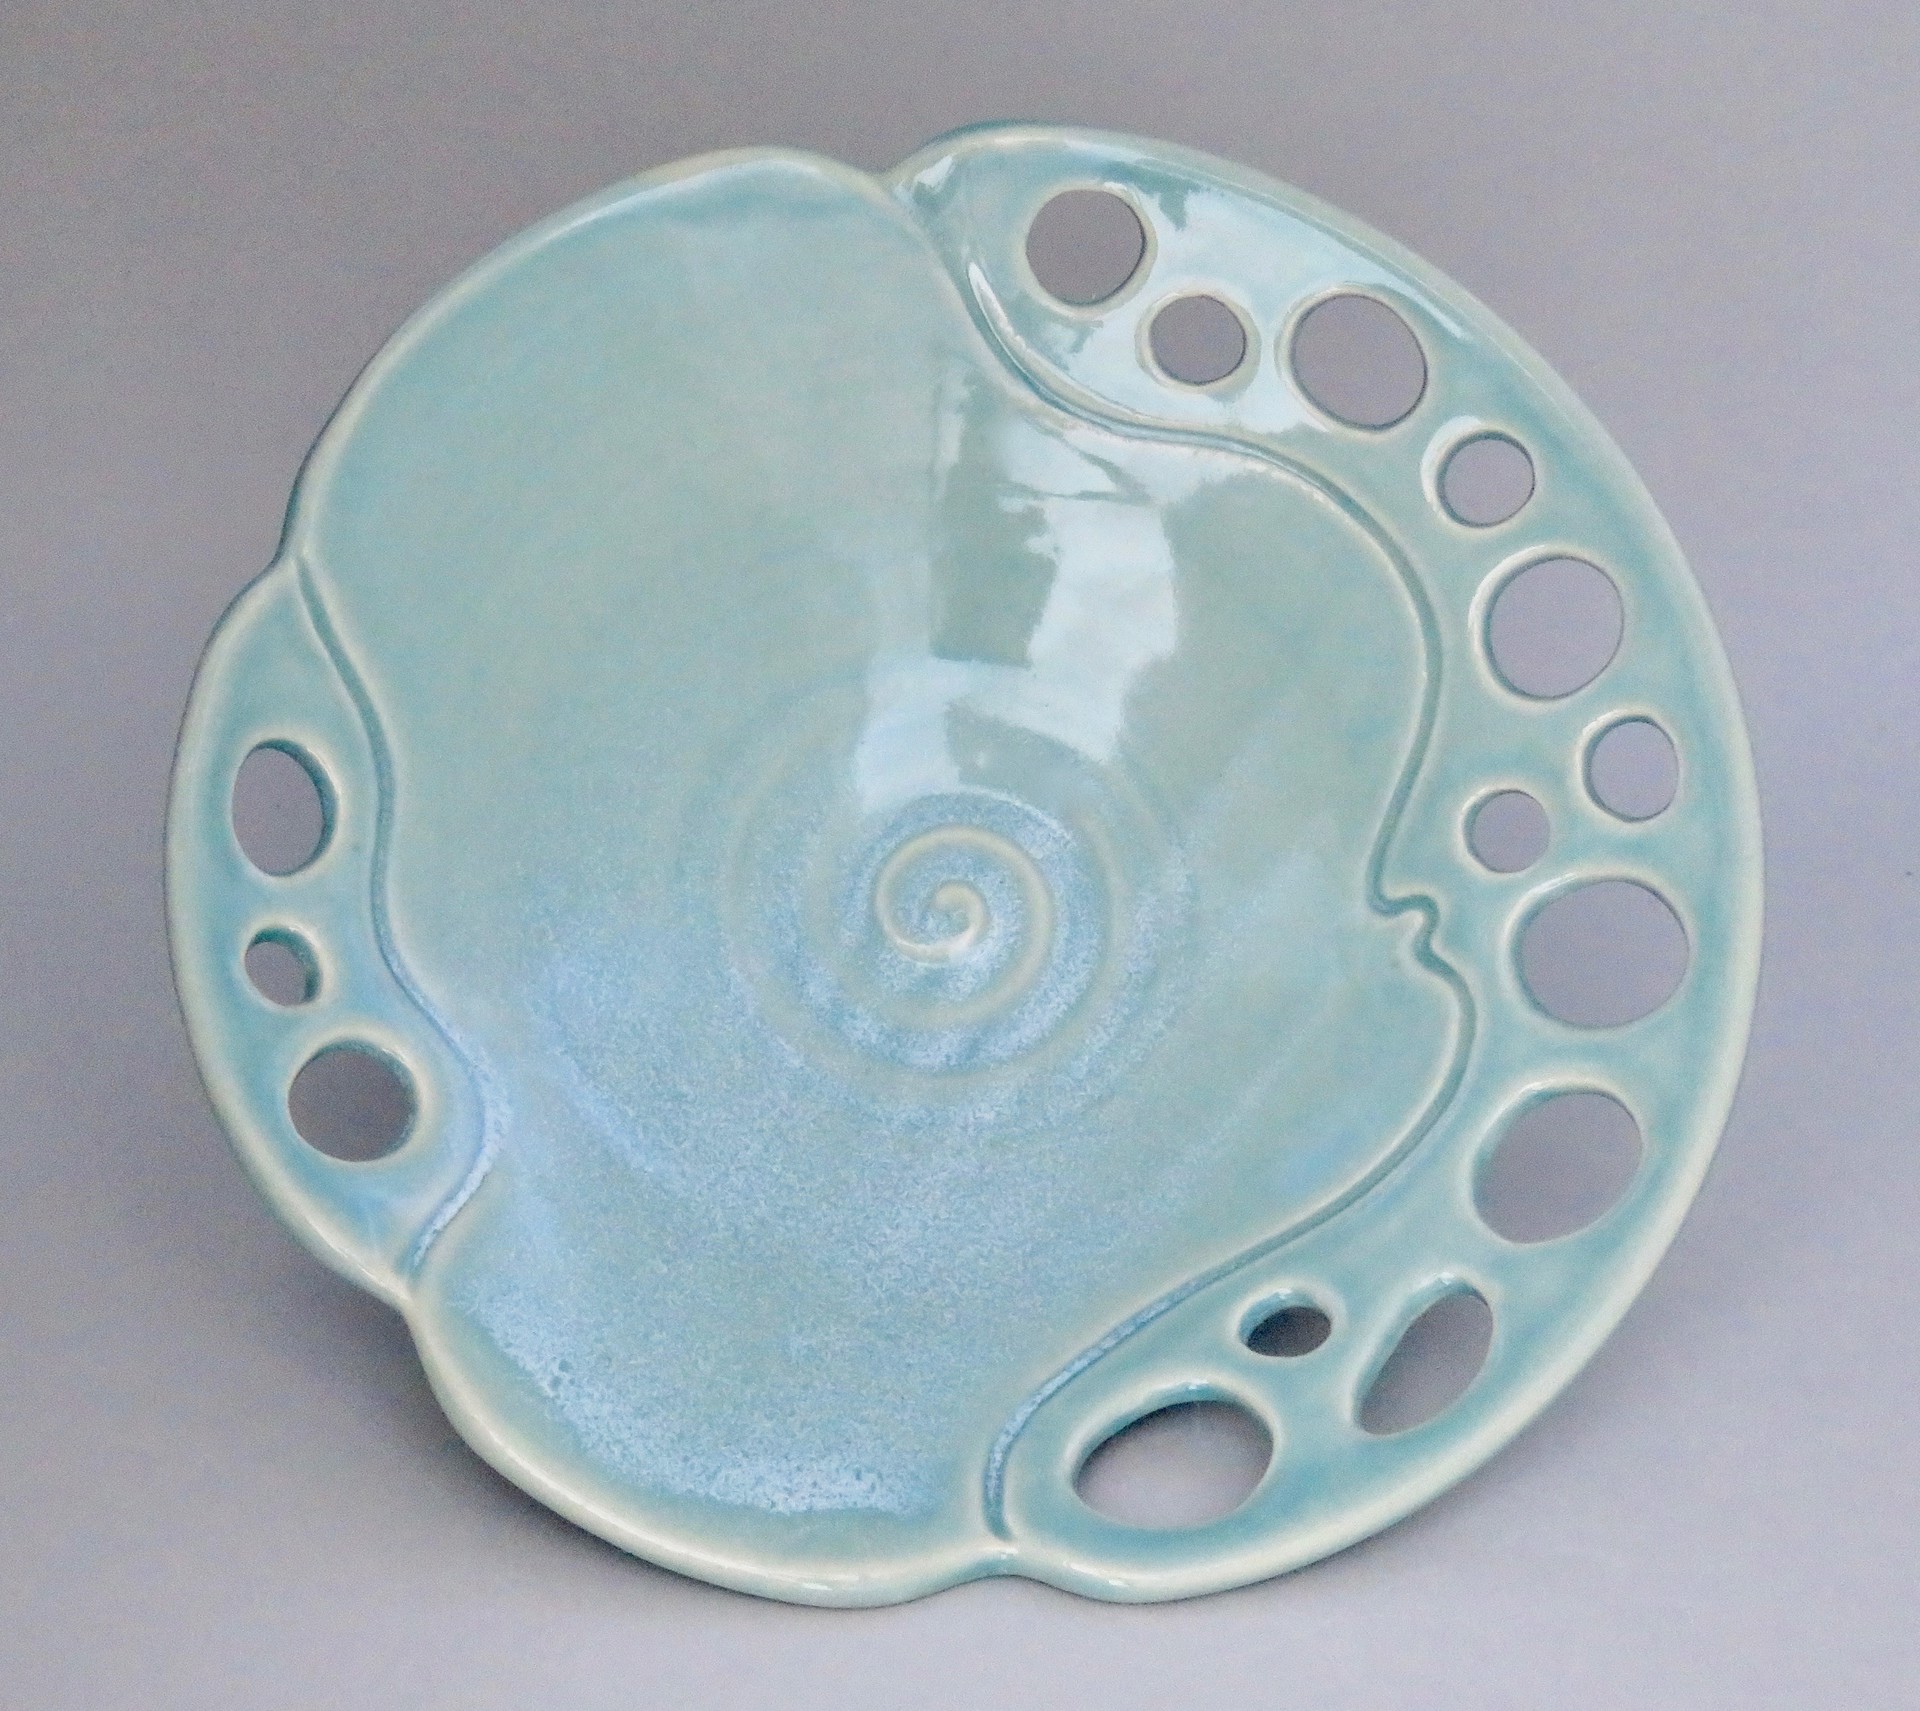 Soft Turquoise Bowl with Minimalist Cutout Design MB #408 by Marty Biernbaum